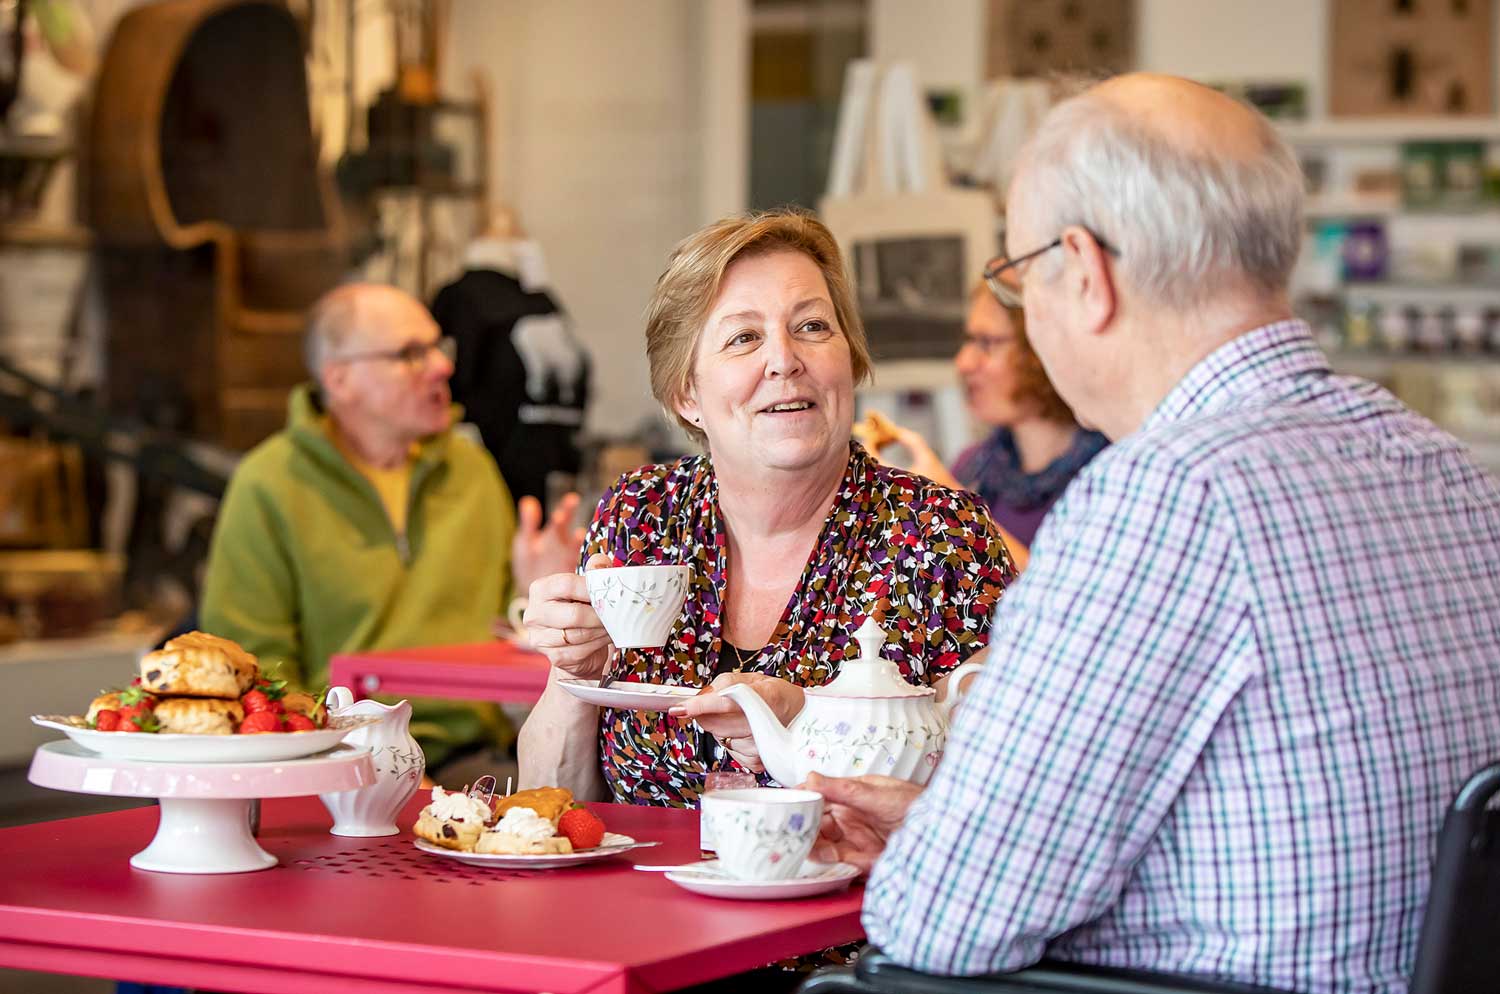 A couple enjoy a cream tea in the MERL cafe